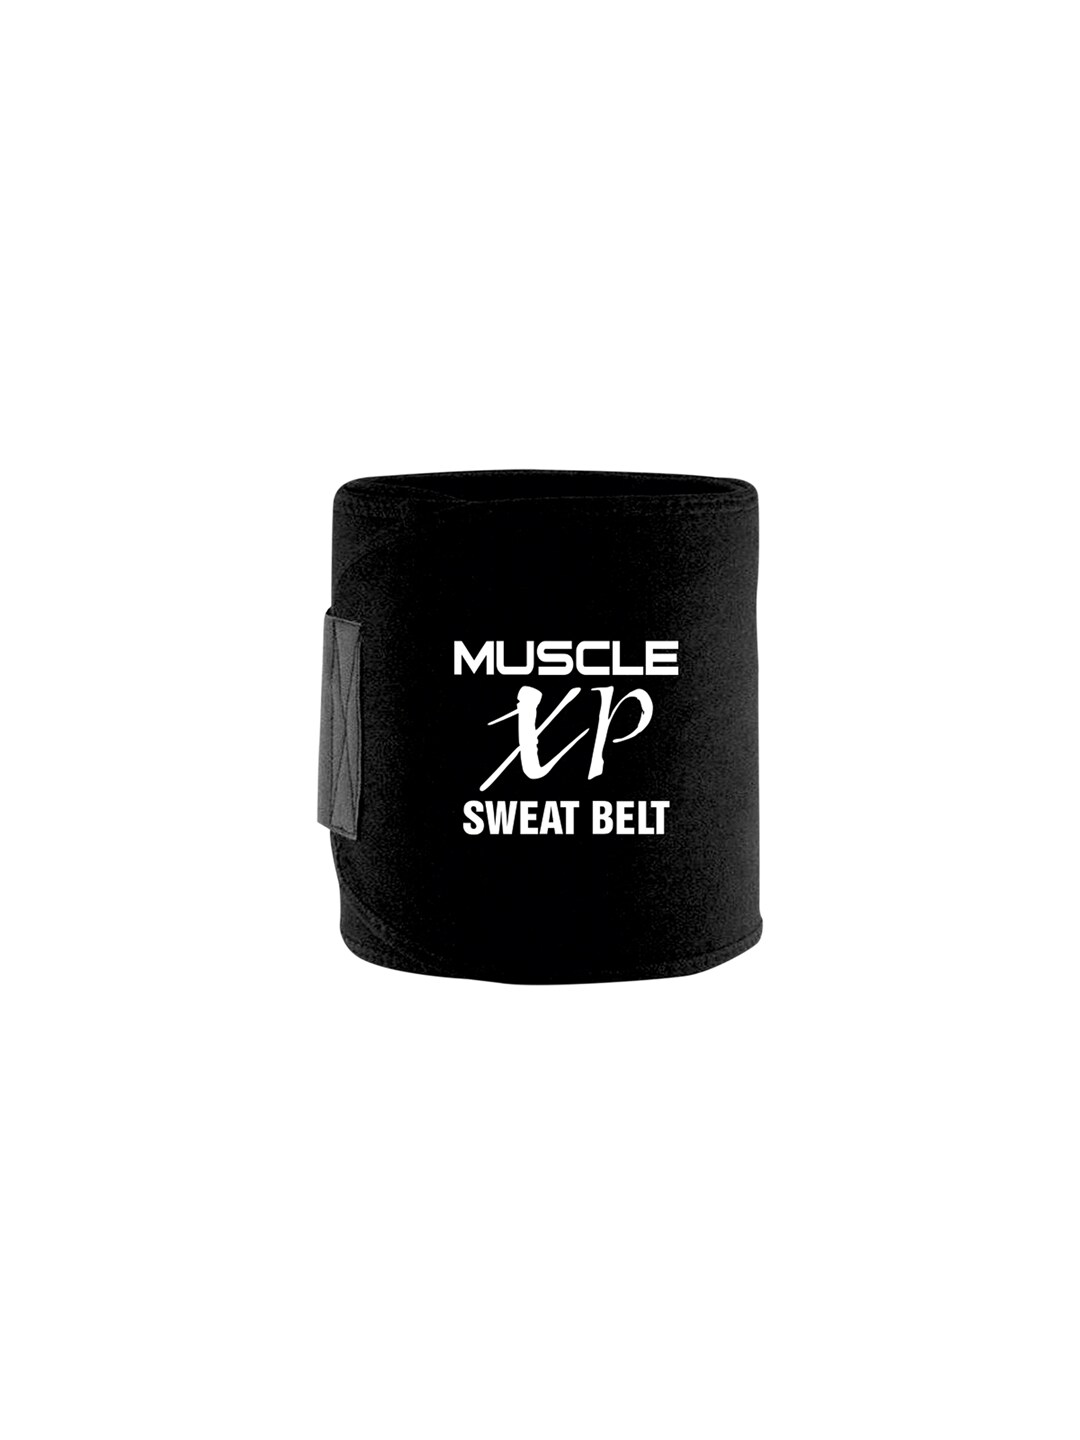 MUSCLEXP Black Solid Sweat Belt Price in India